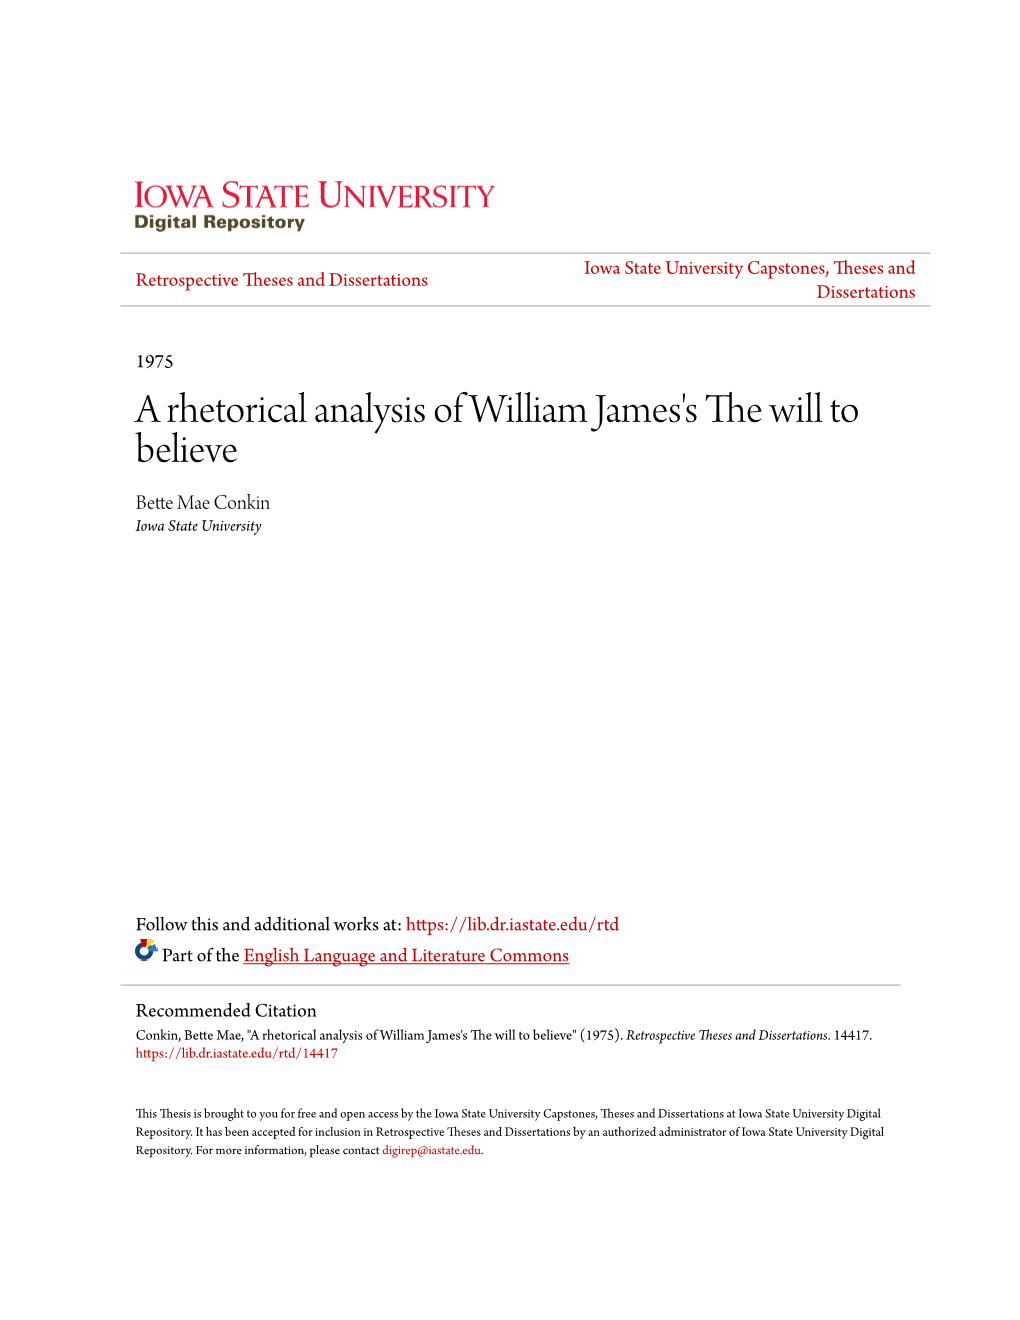 A Rhetorical Analysis of William James's the Will to Believe Bette Mae Conkin Iowa State University